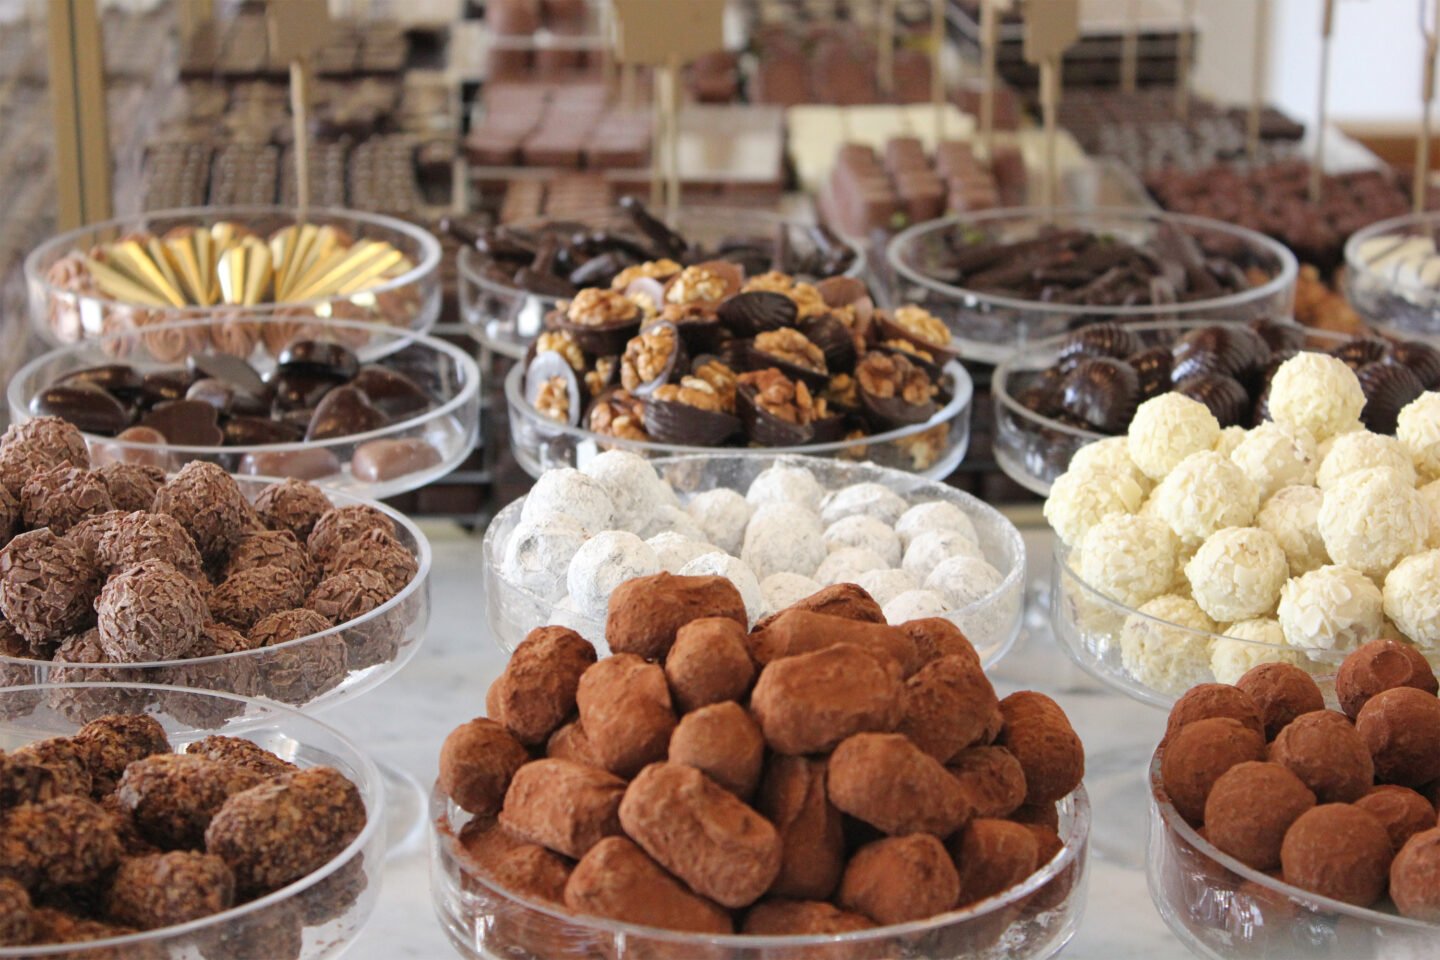 Belgian chocolates and truffles